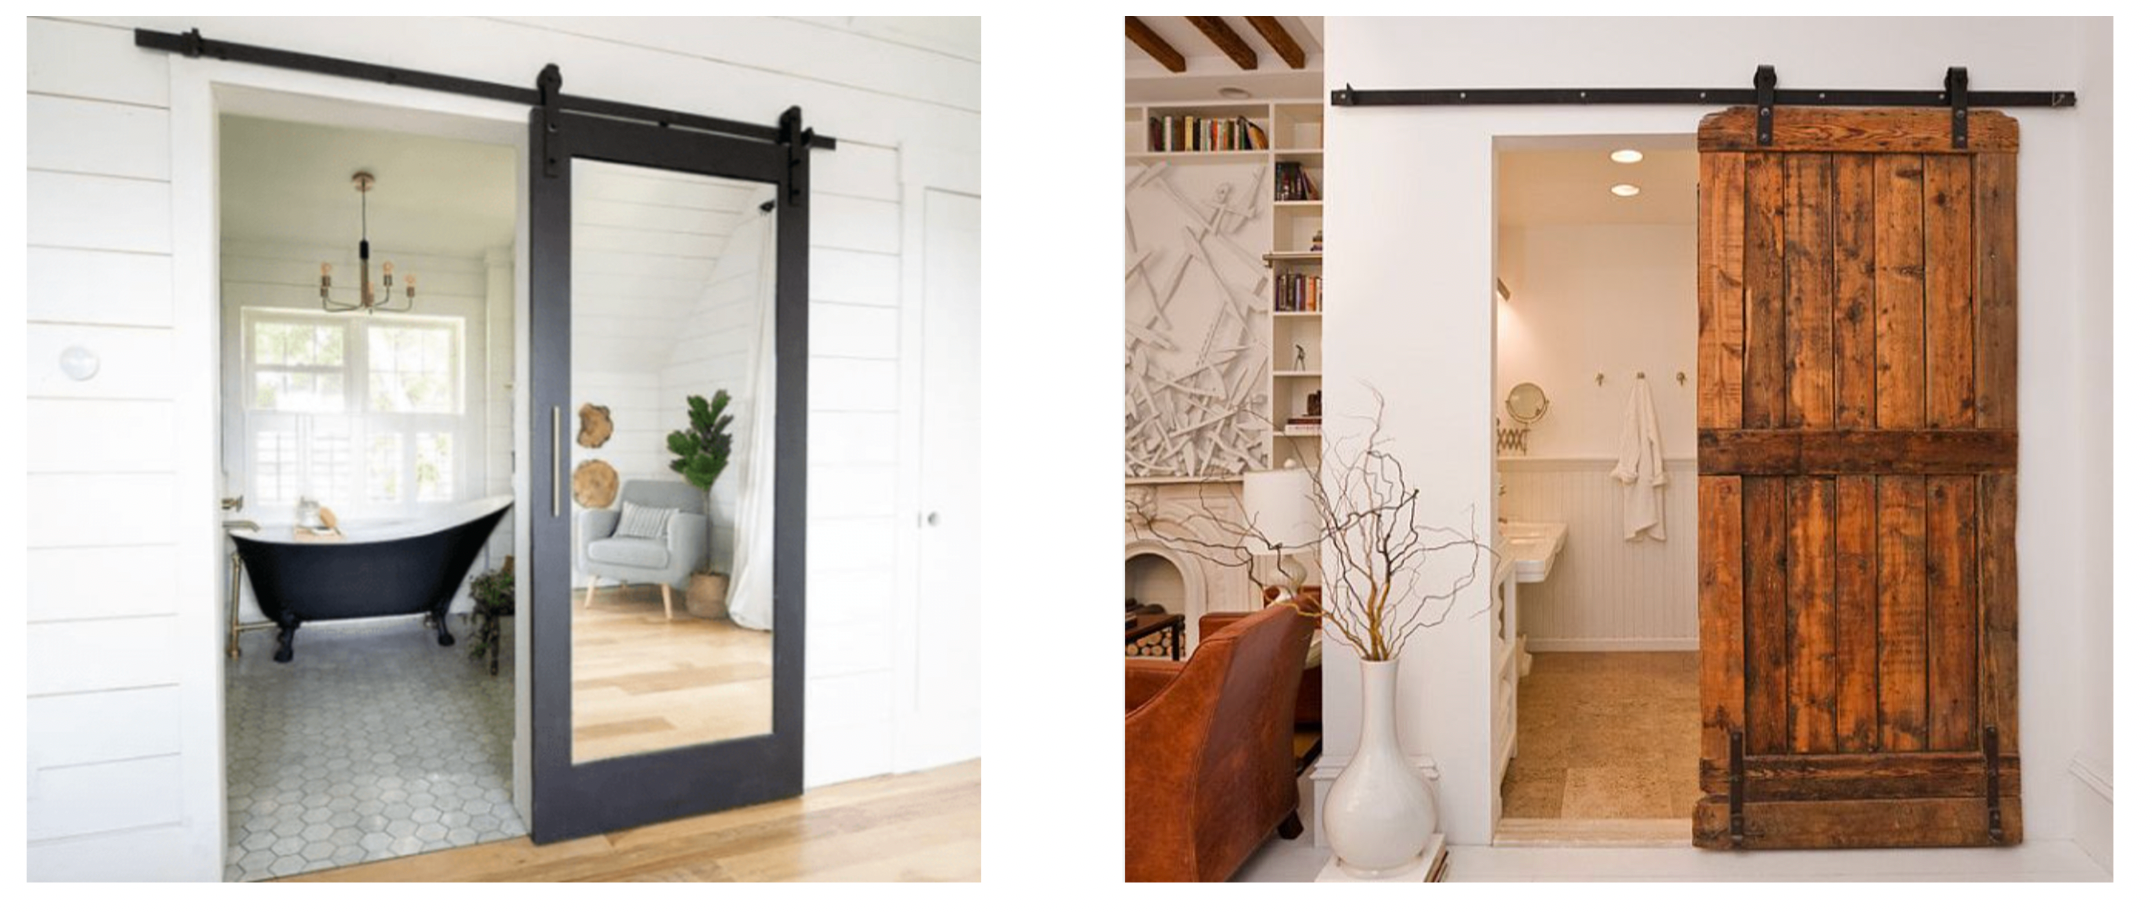 Sliding Barn Doors - Framed with a Decorative Mirror // Re-purposed Wood Barn Door